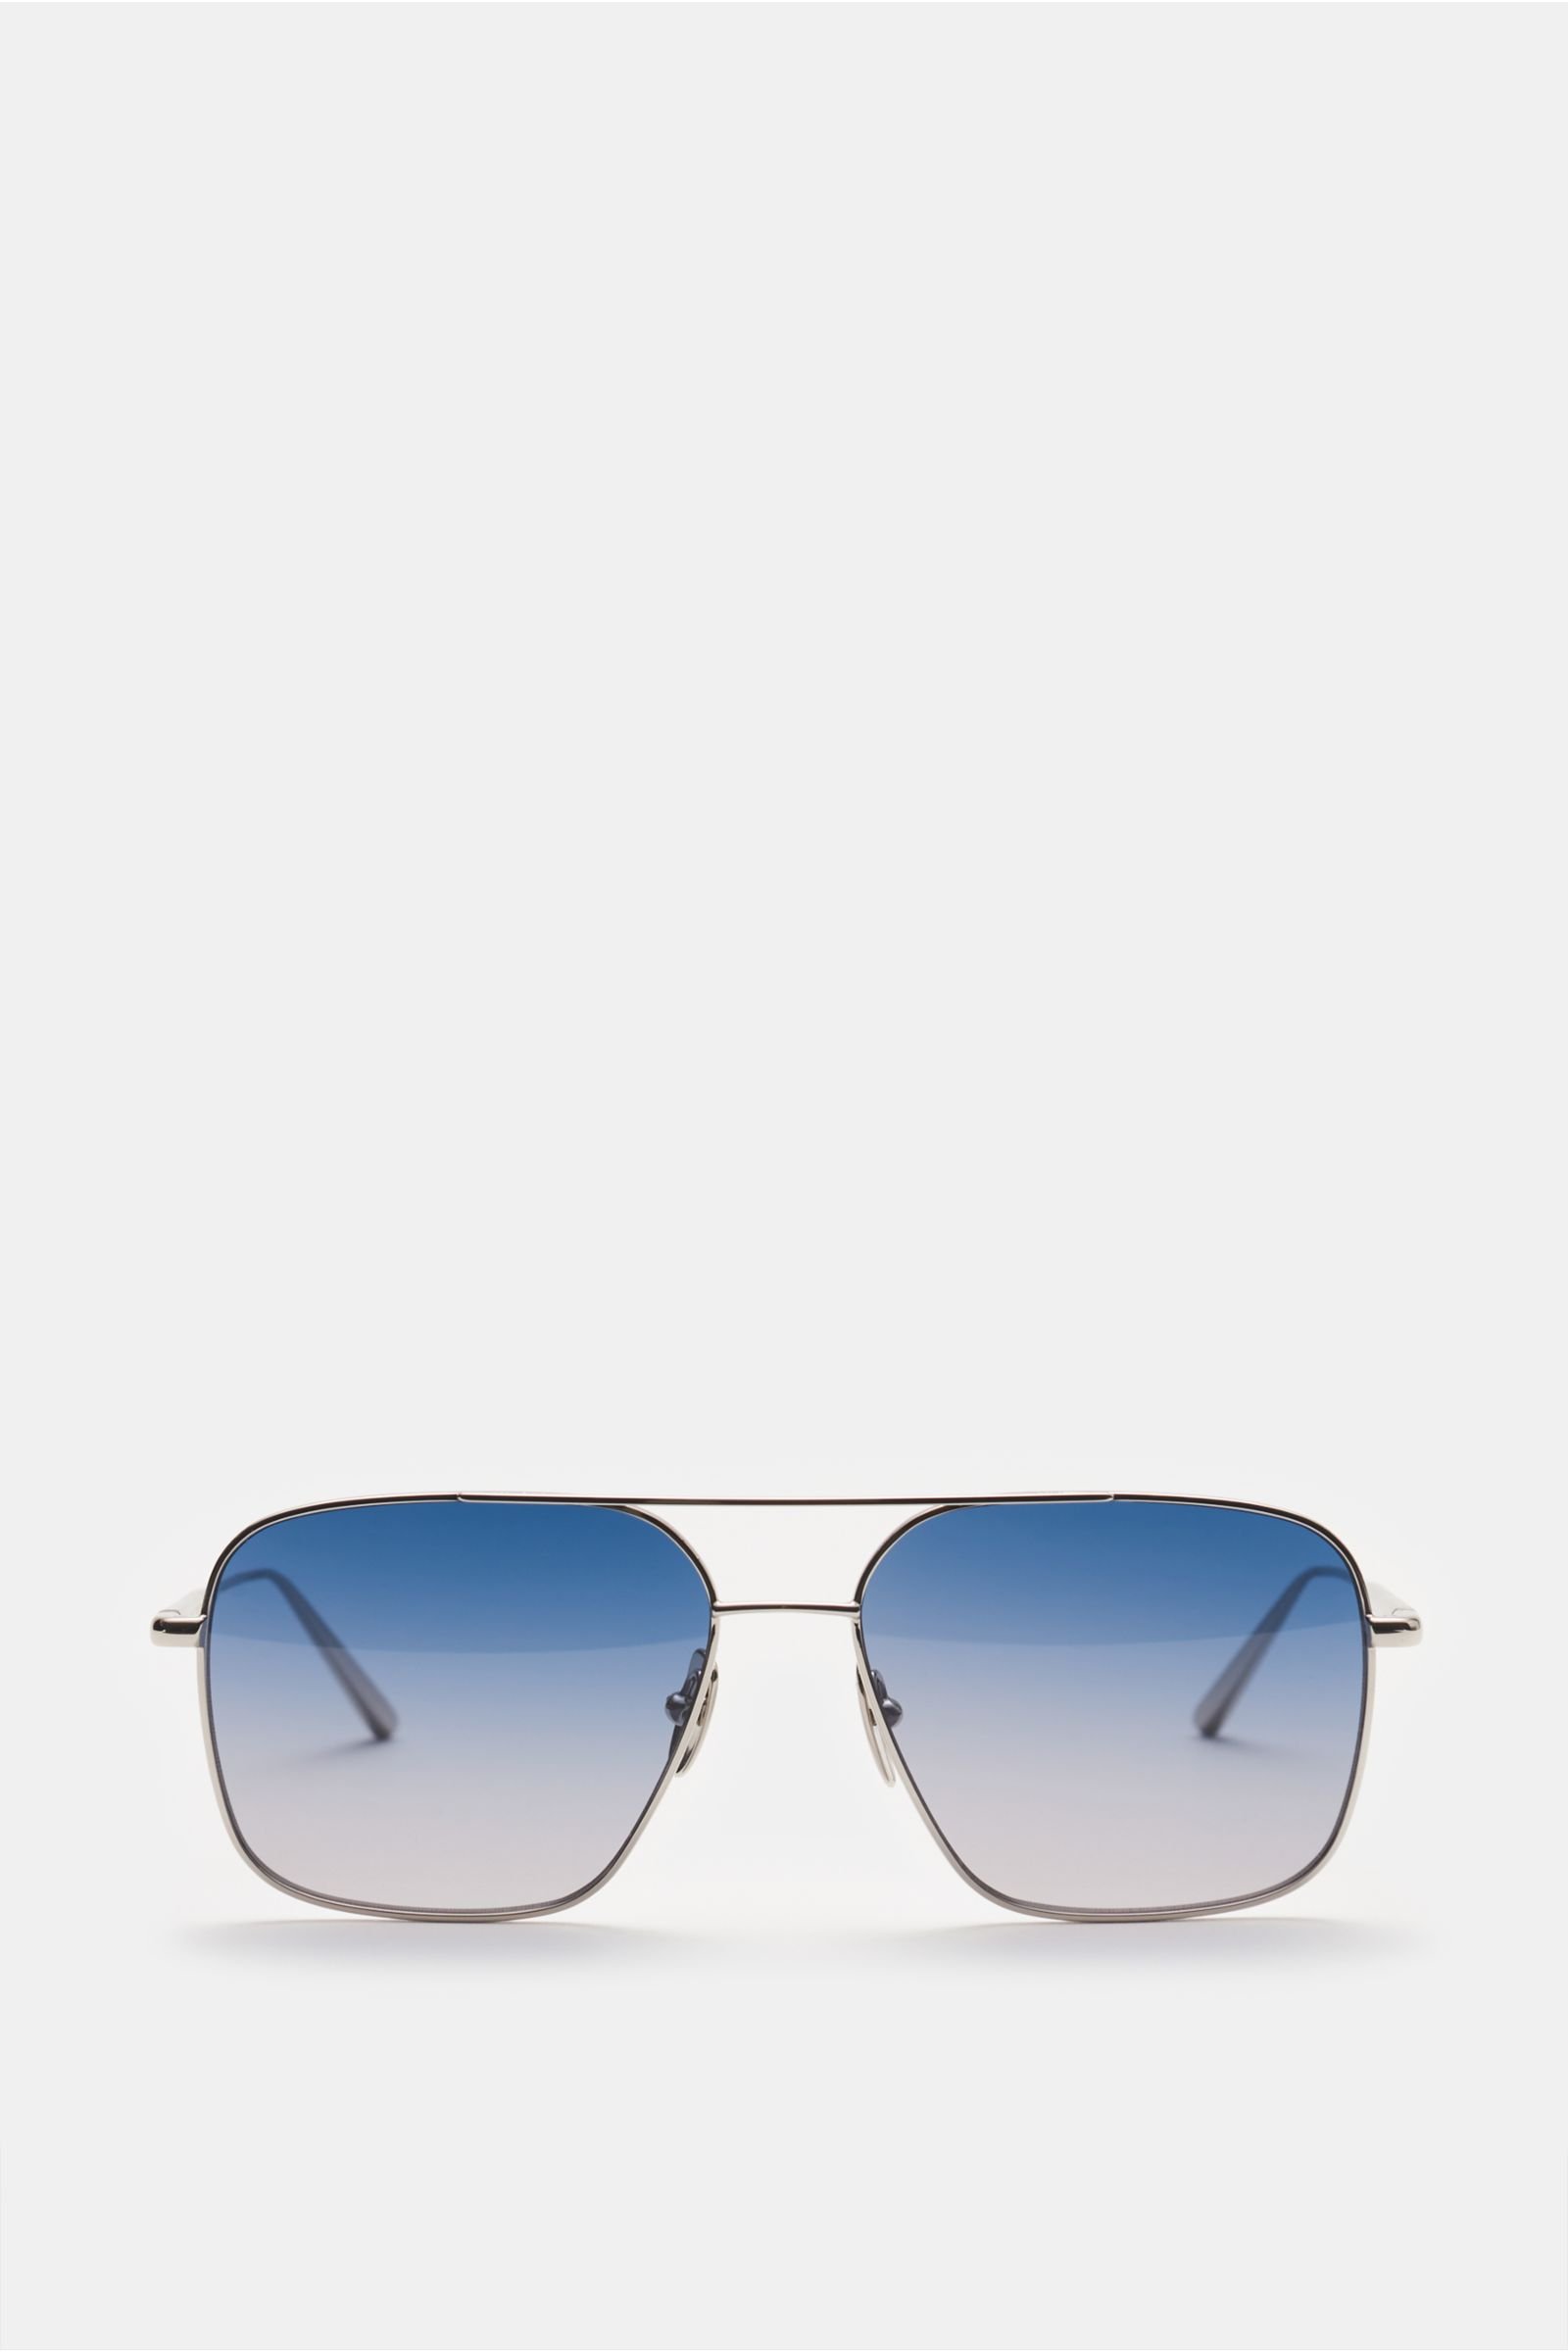 CHIMI sunglasses 'Aviator' silver/smoky blue/grey | BRAUN Hamburg